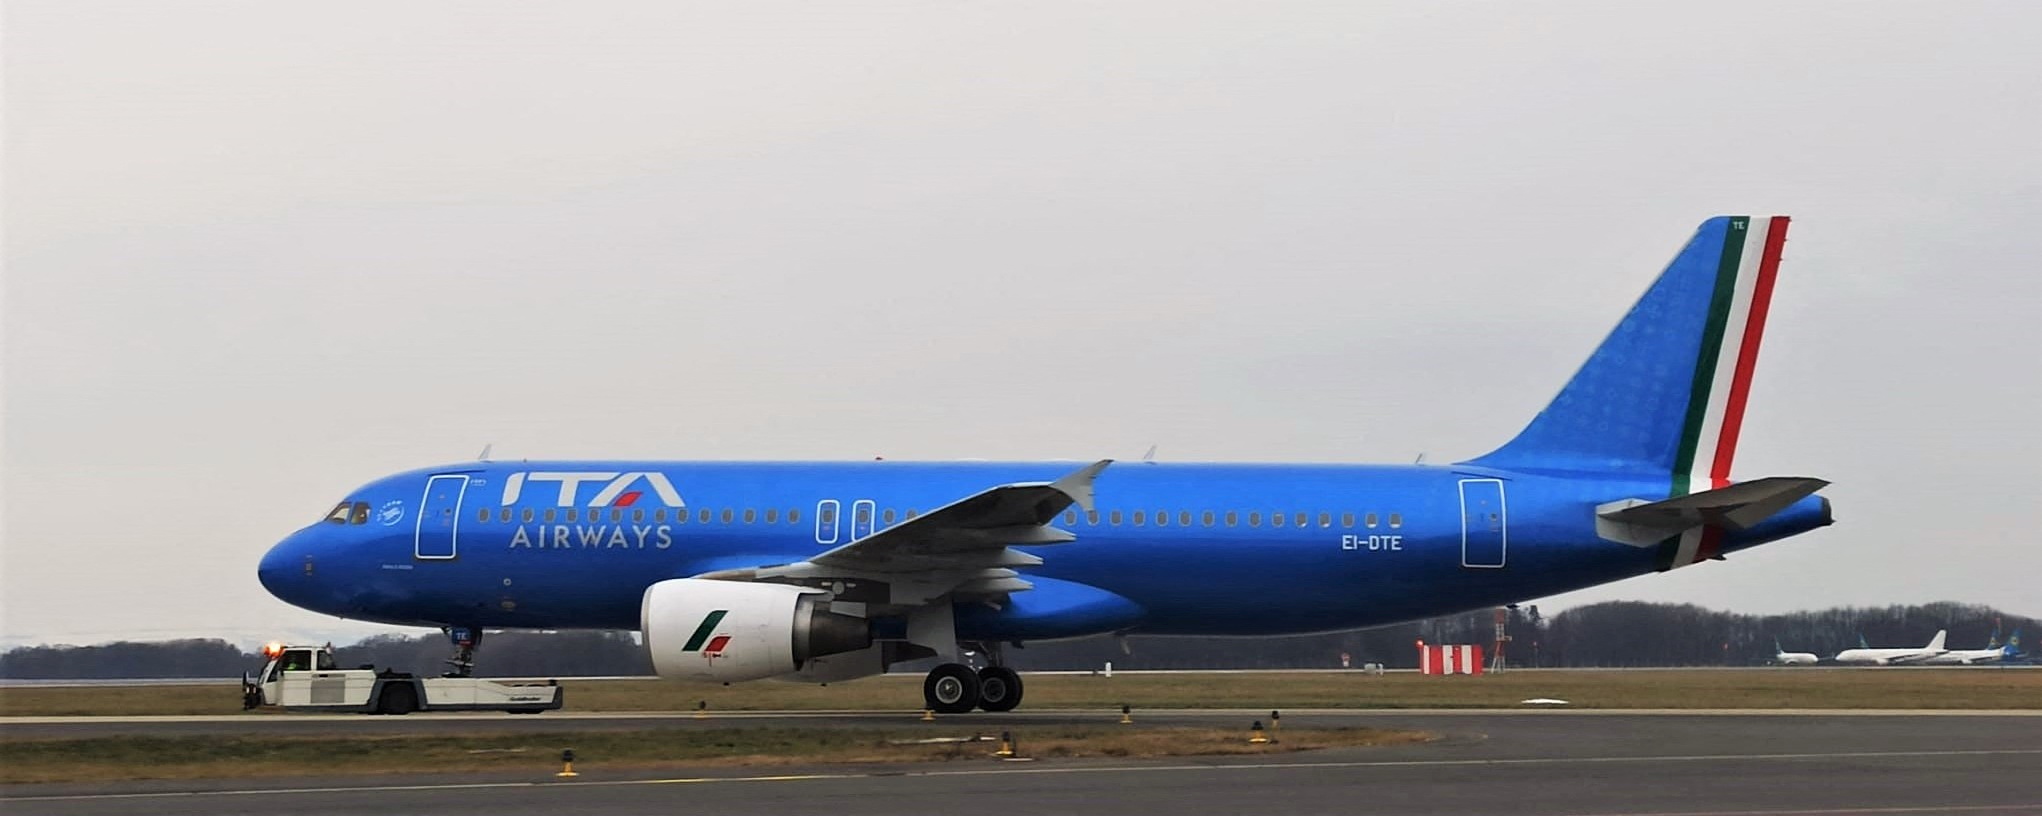 A quoi peut s'attendre Air France-KLM en entrant chez ITA Airways (ex Alitalia) ?